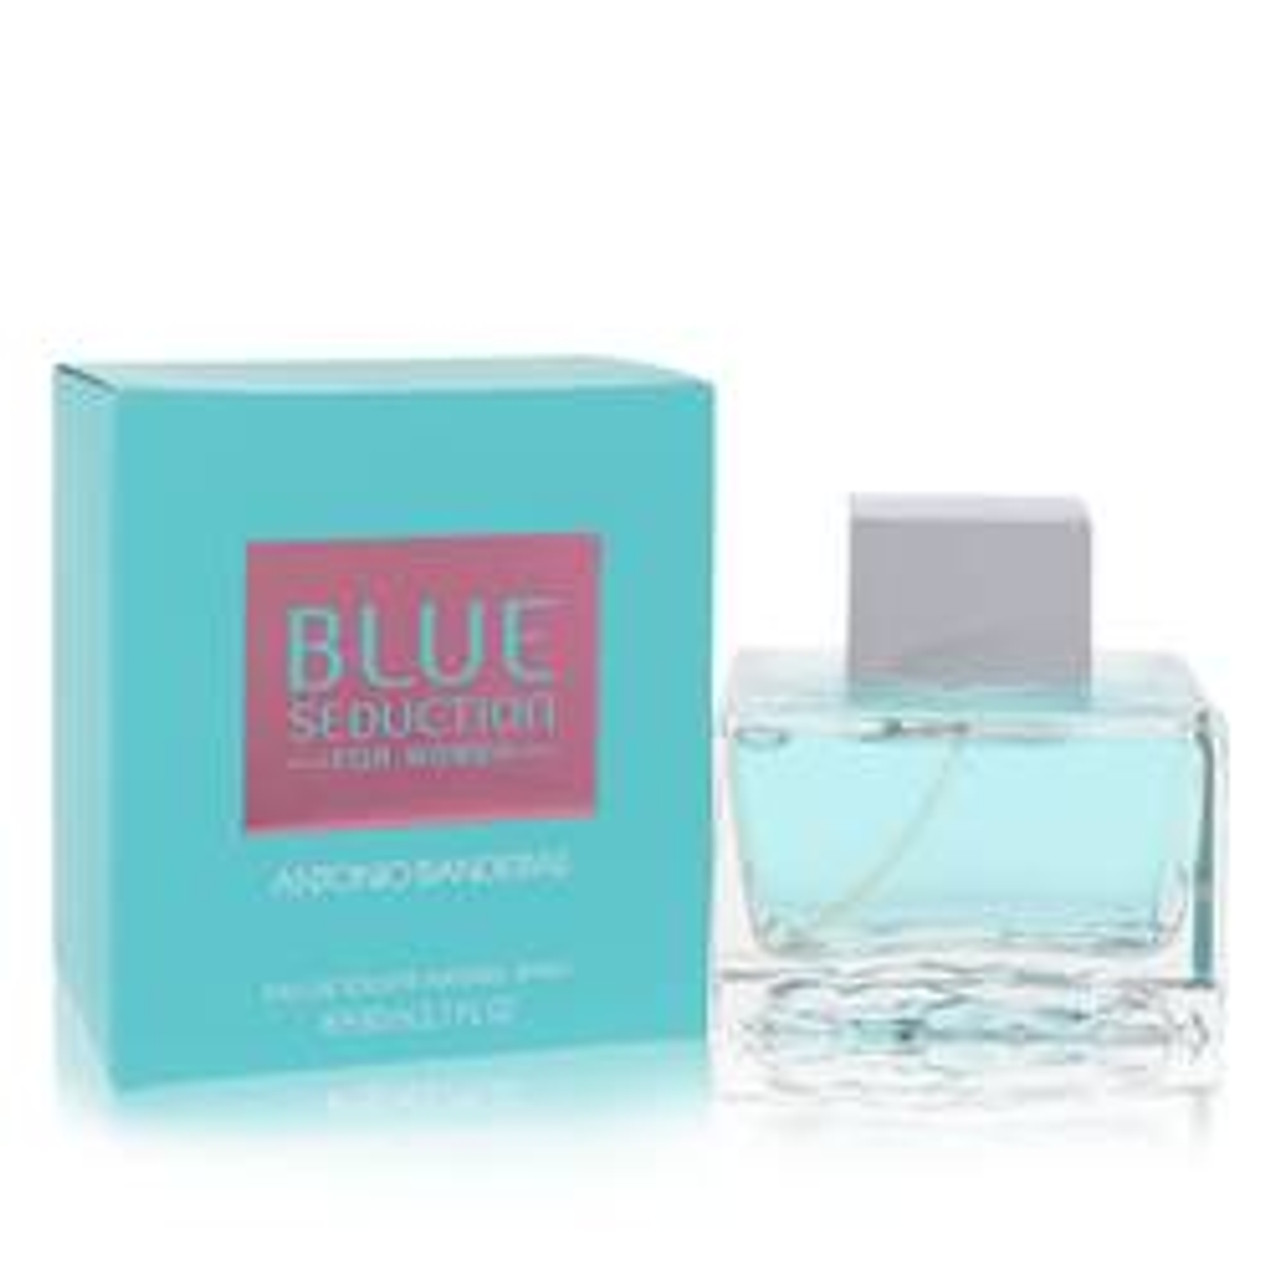 Blue Seduction Perfume By Antonio Banderas Eau De Toilette Spray 2.7 oz for Women - [From 67.00 - Choose pk Qty ] - *Ships from Miami